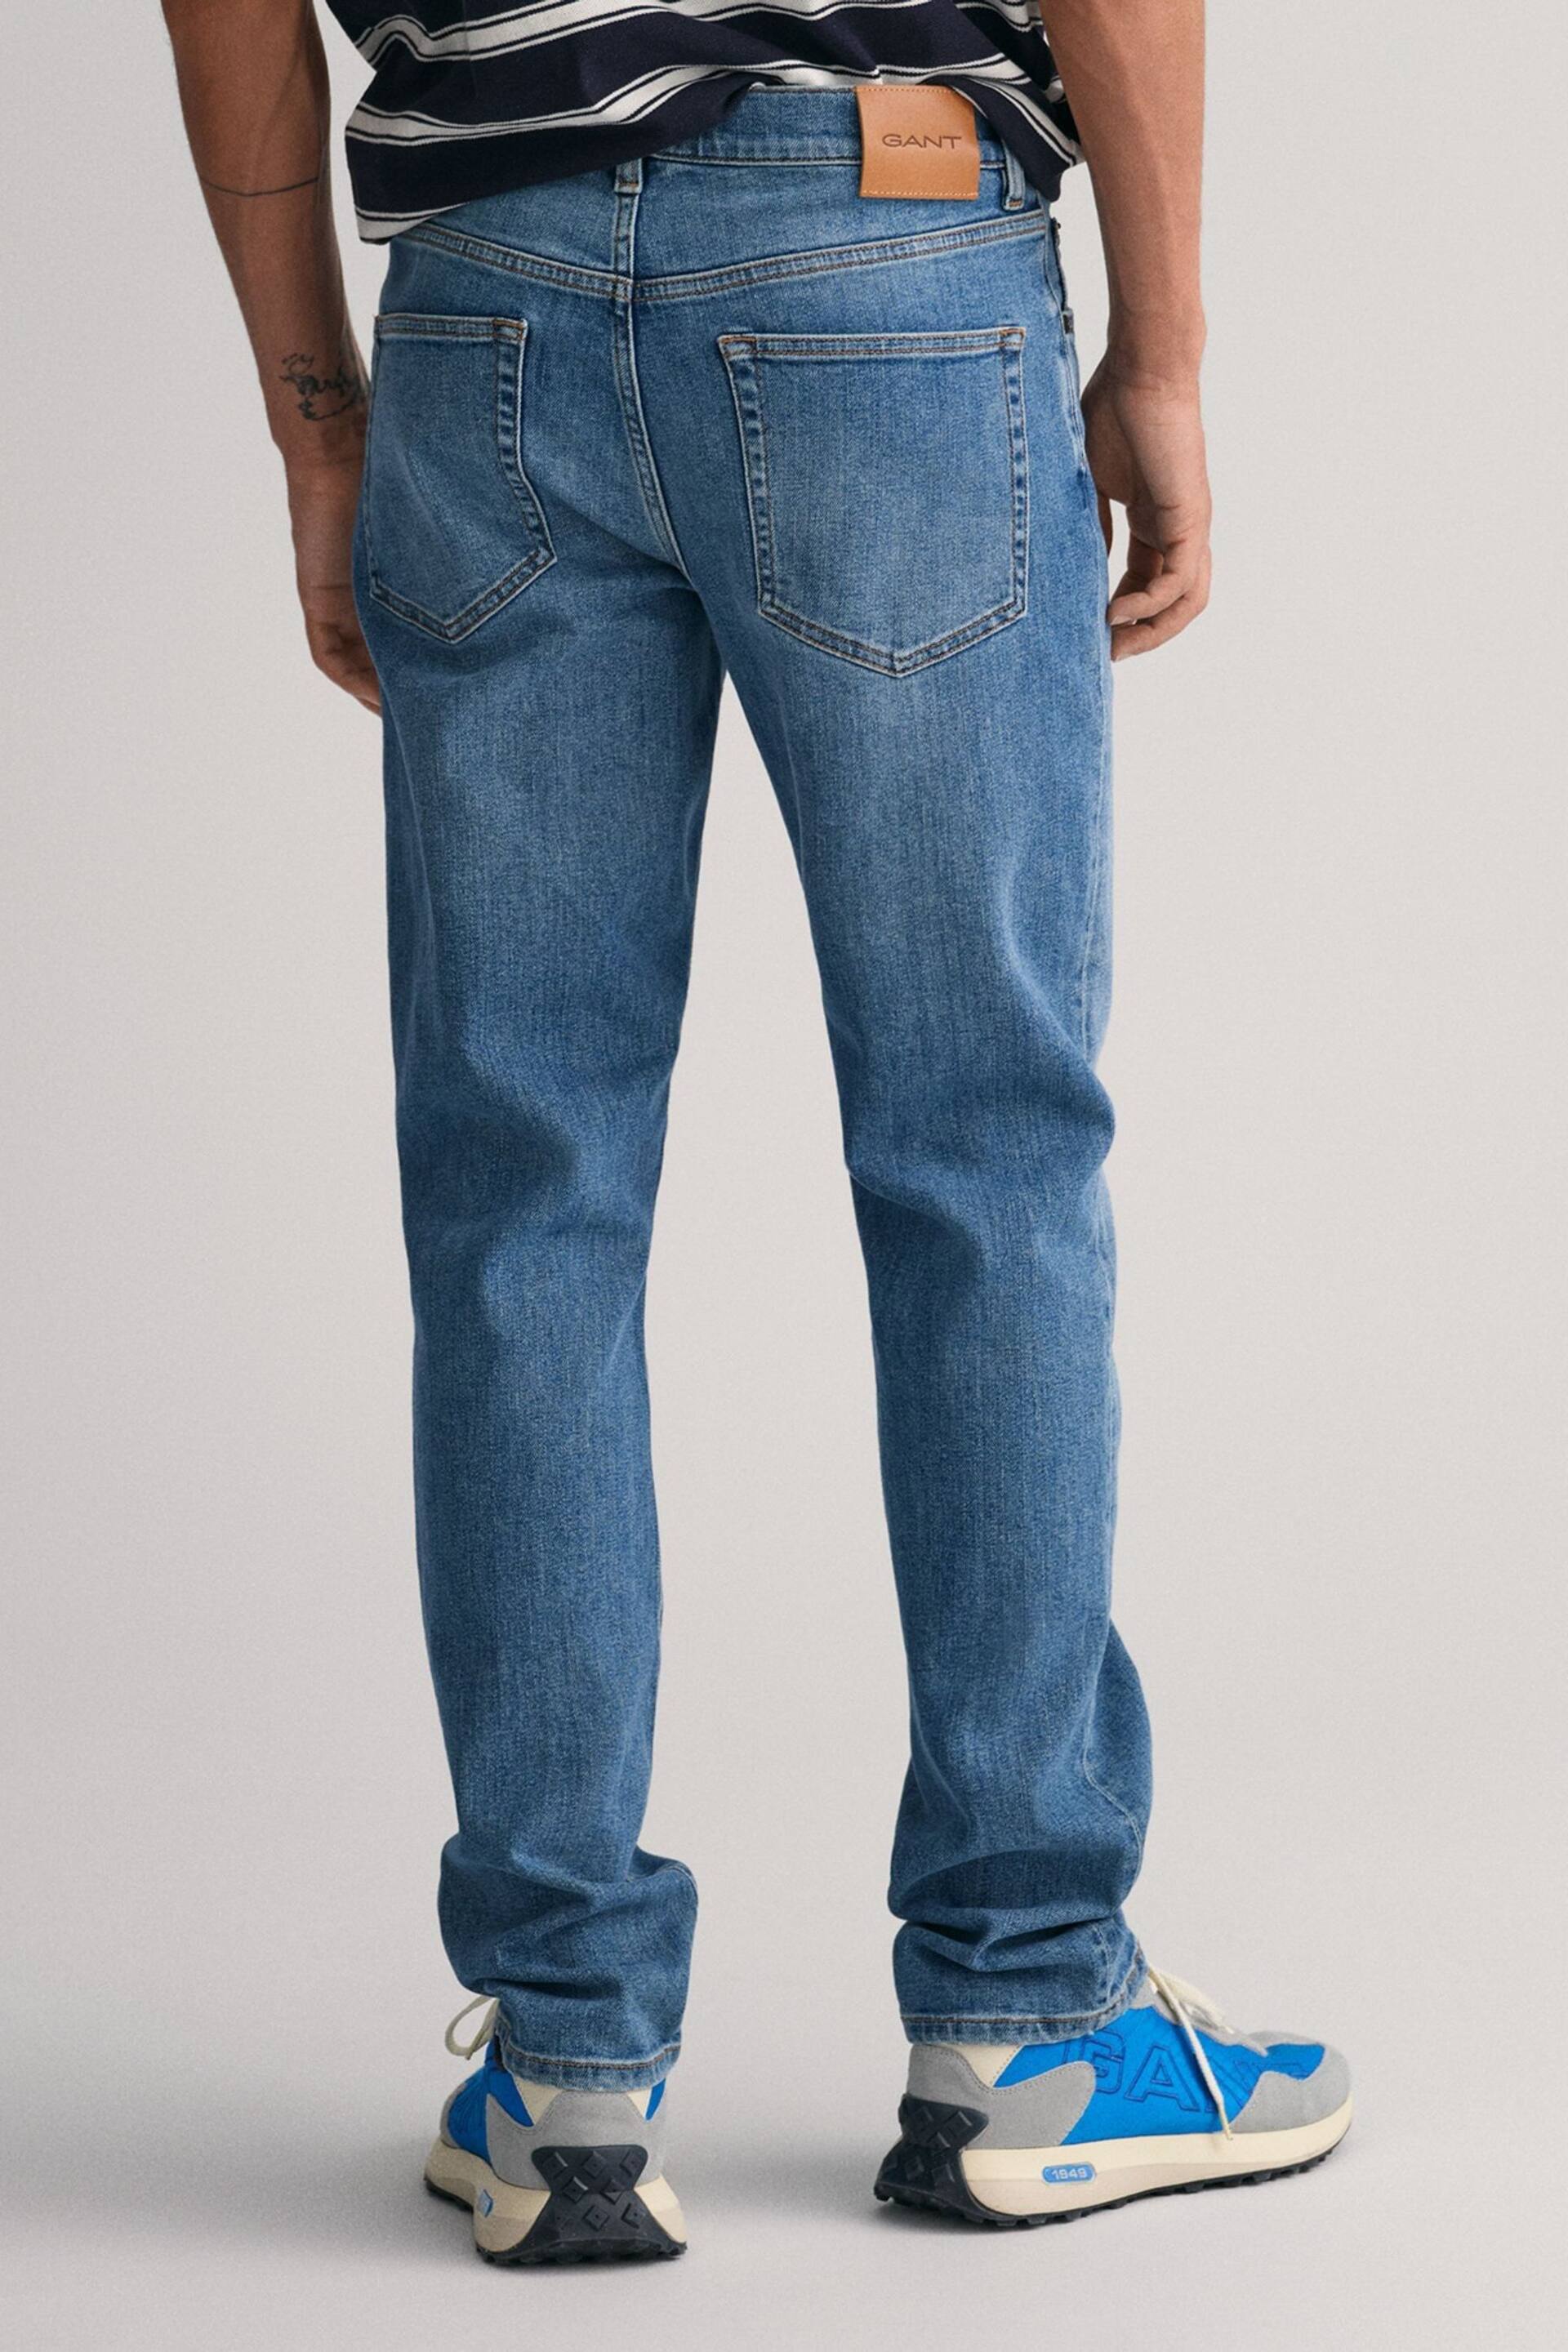 GANT Worn In Slim Fit Jeans - Image 2 of 5